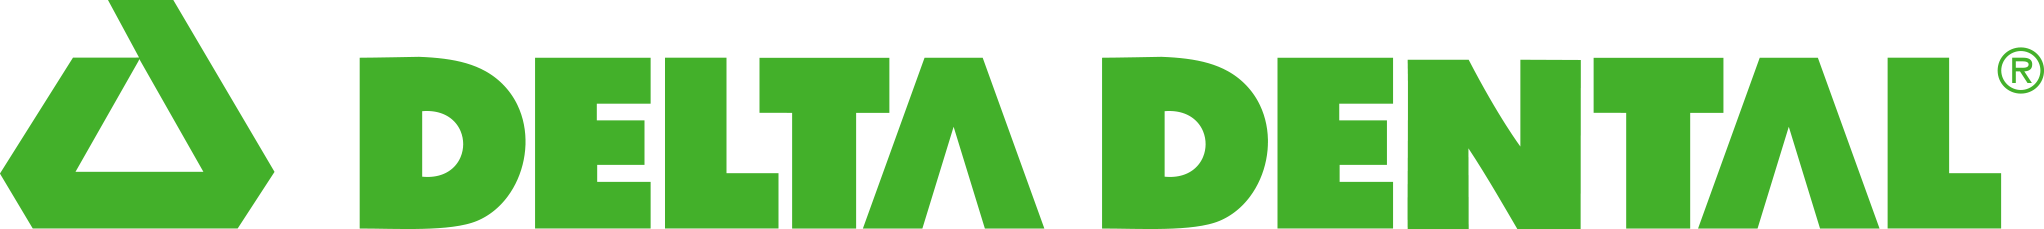 logo-ddpa-green.png